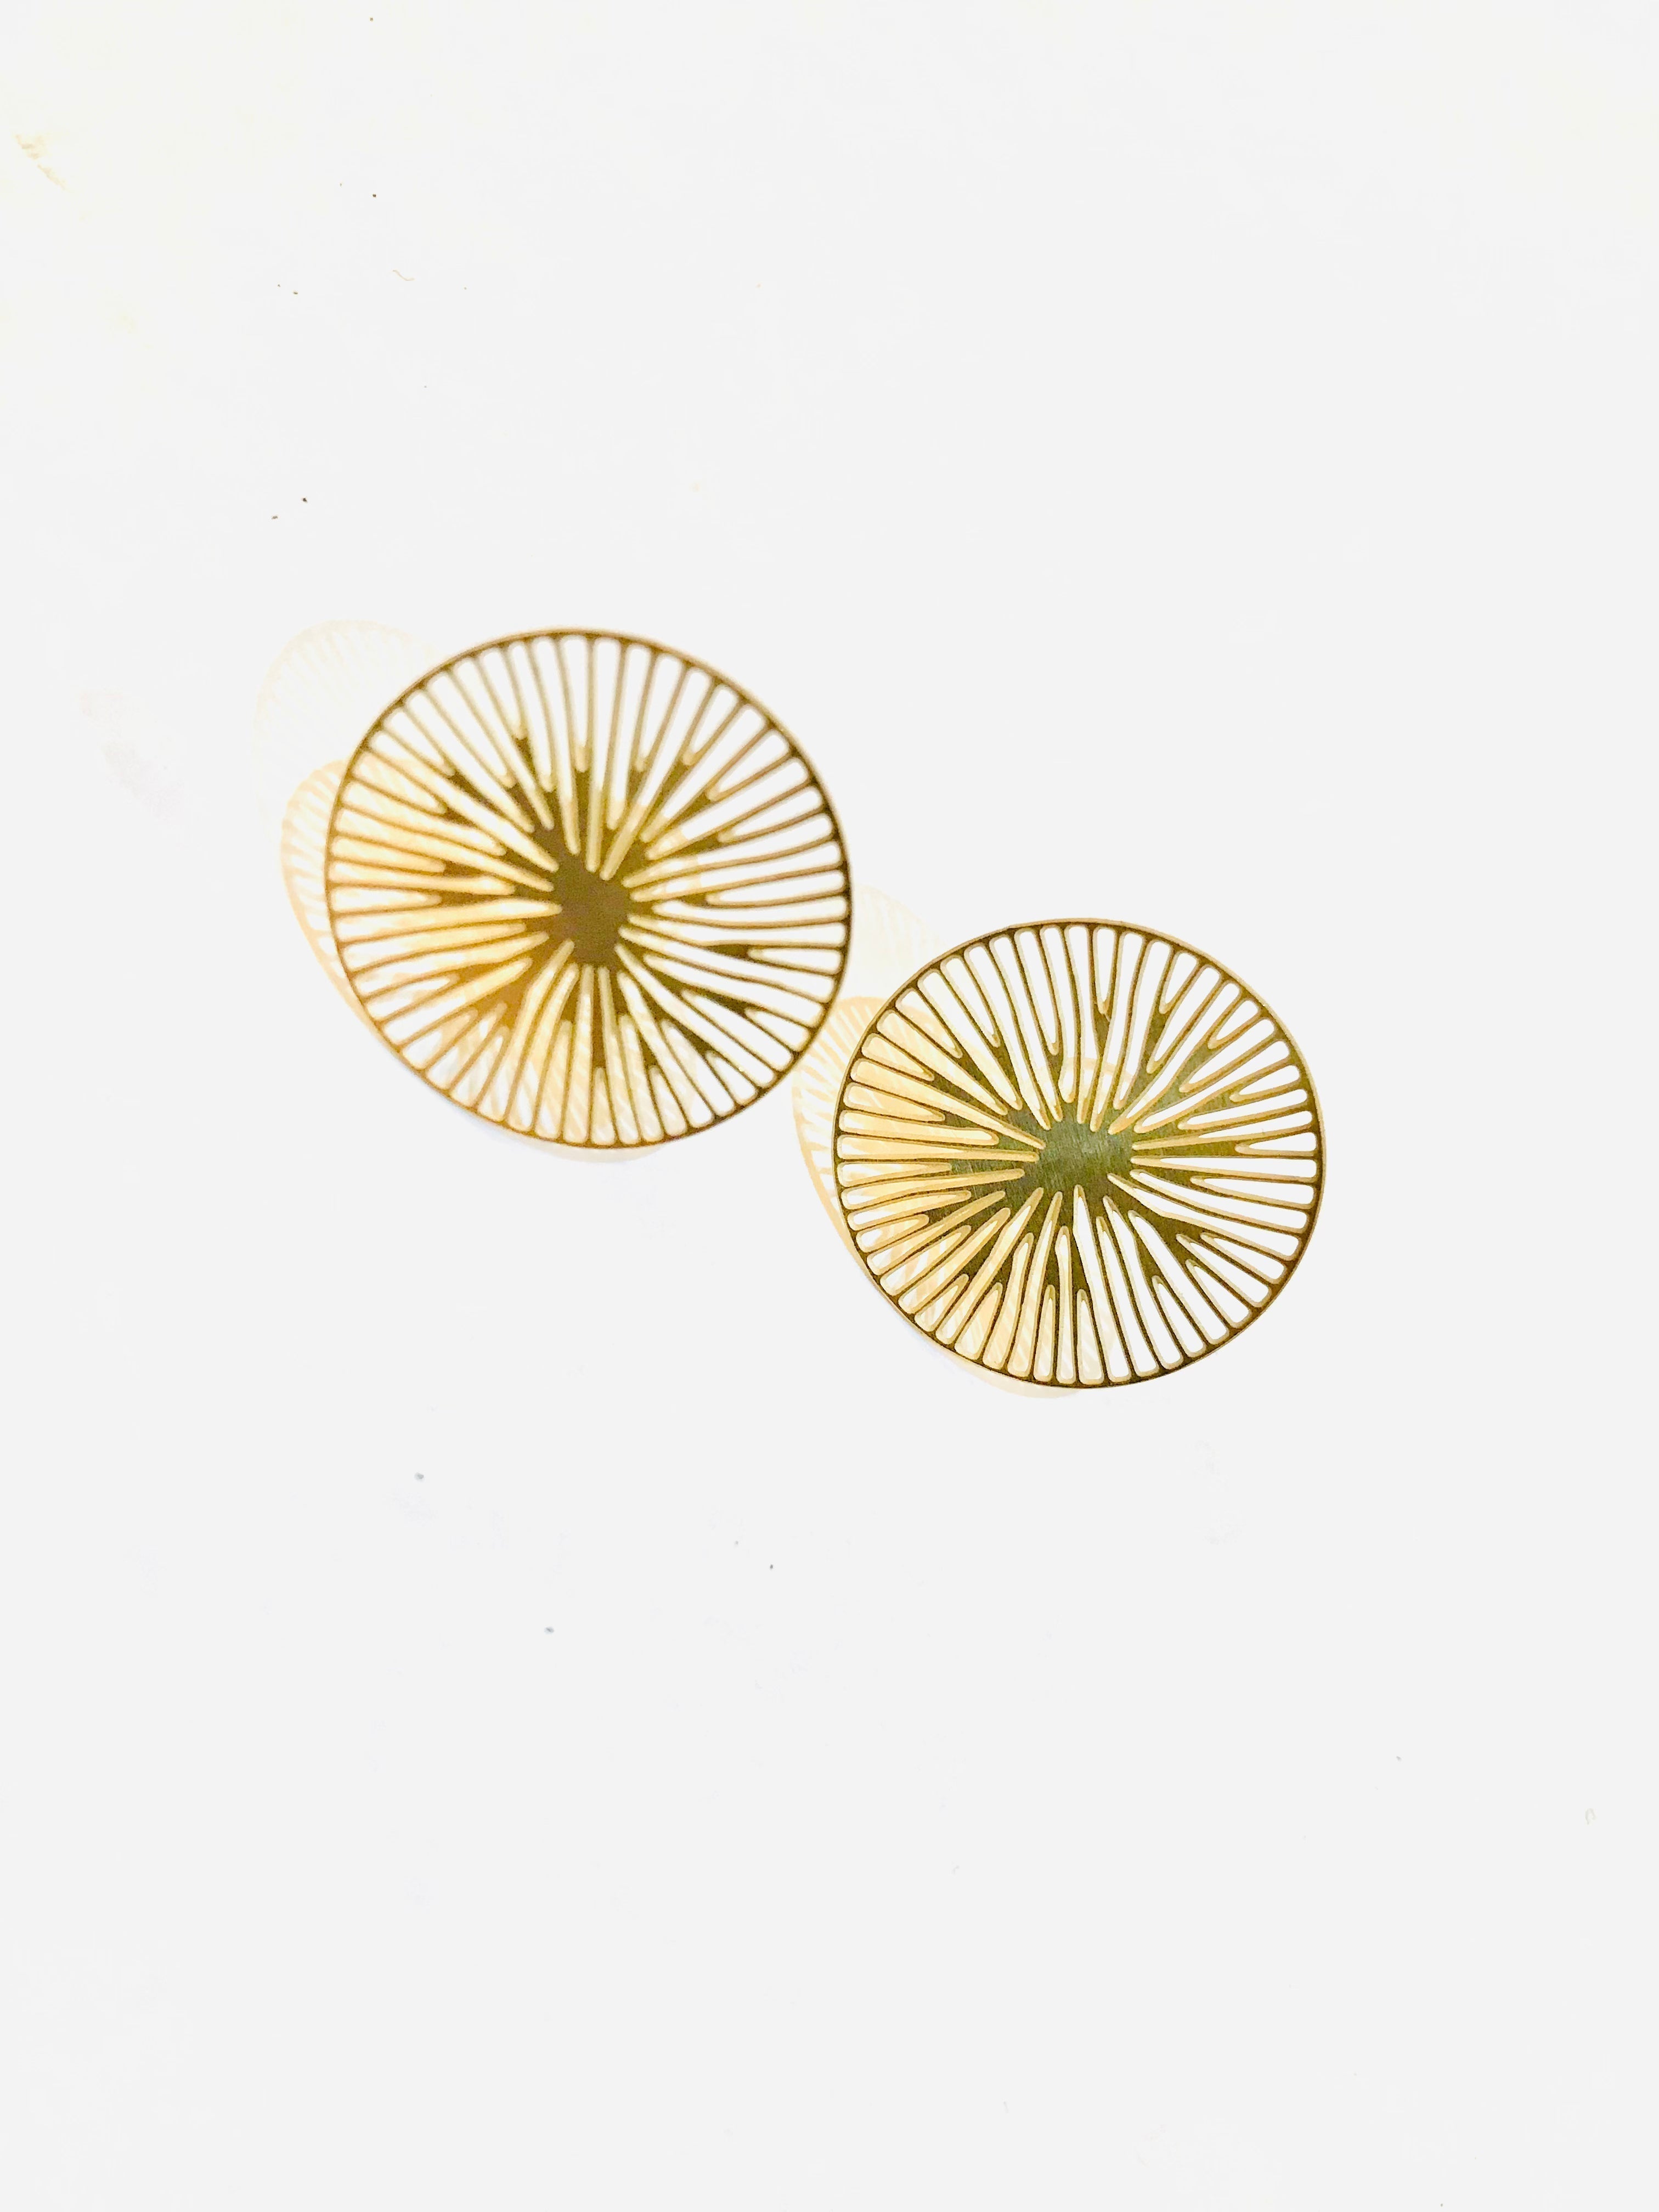 Mushroom Earrings Gold - The Nancy Smillie Shop - Art, Jewellery & Designer Gifts Glasgow